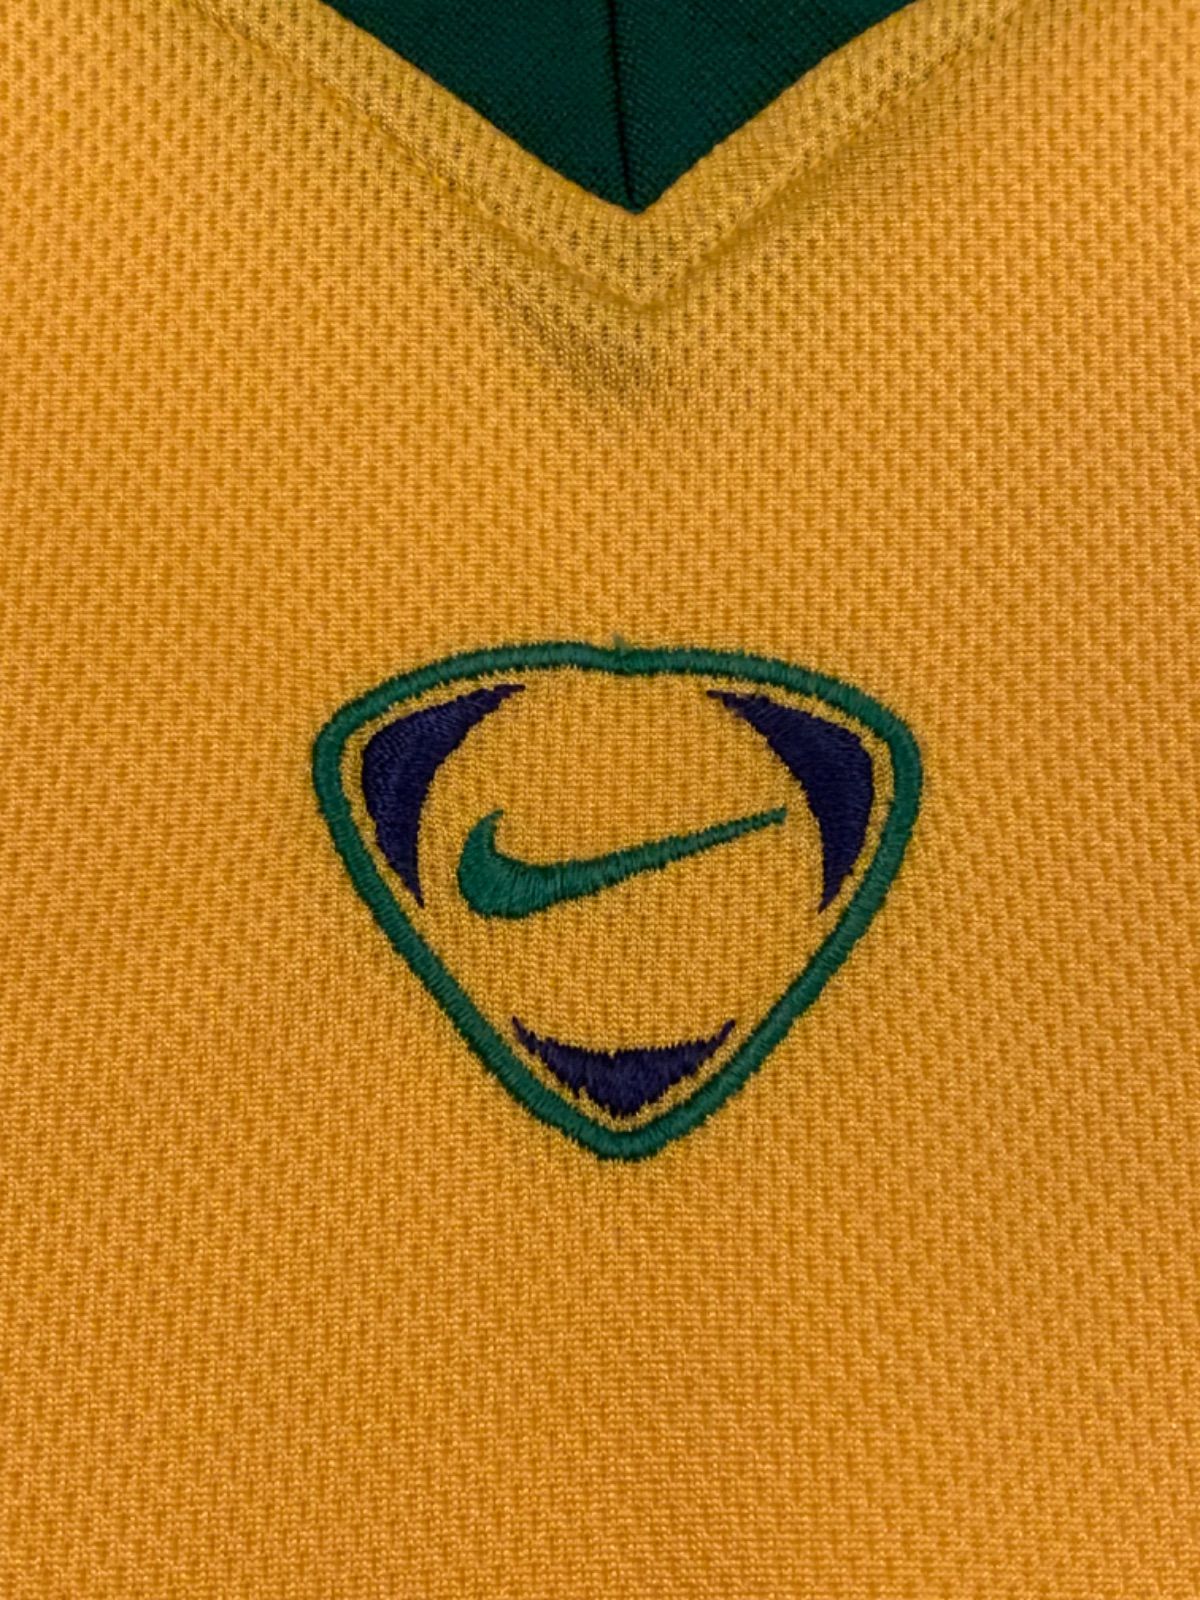 00s NIKE “Brazil” S/S Football Game Shirt ナイキ フットボール